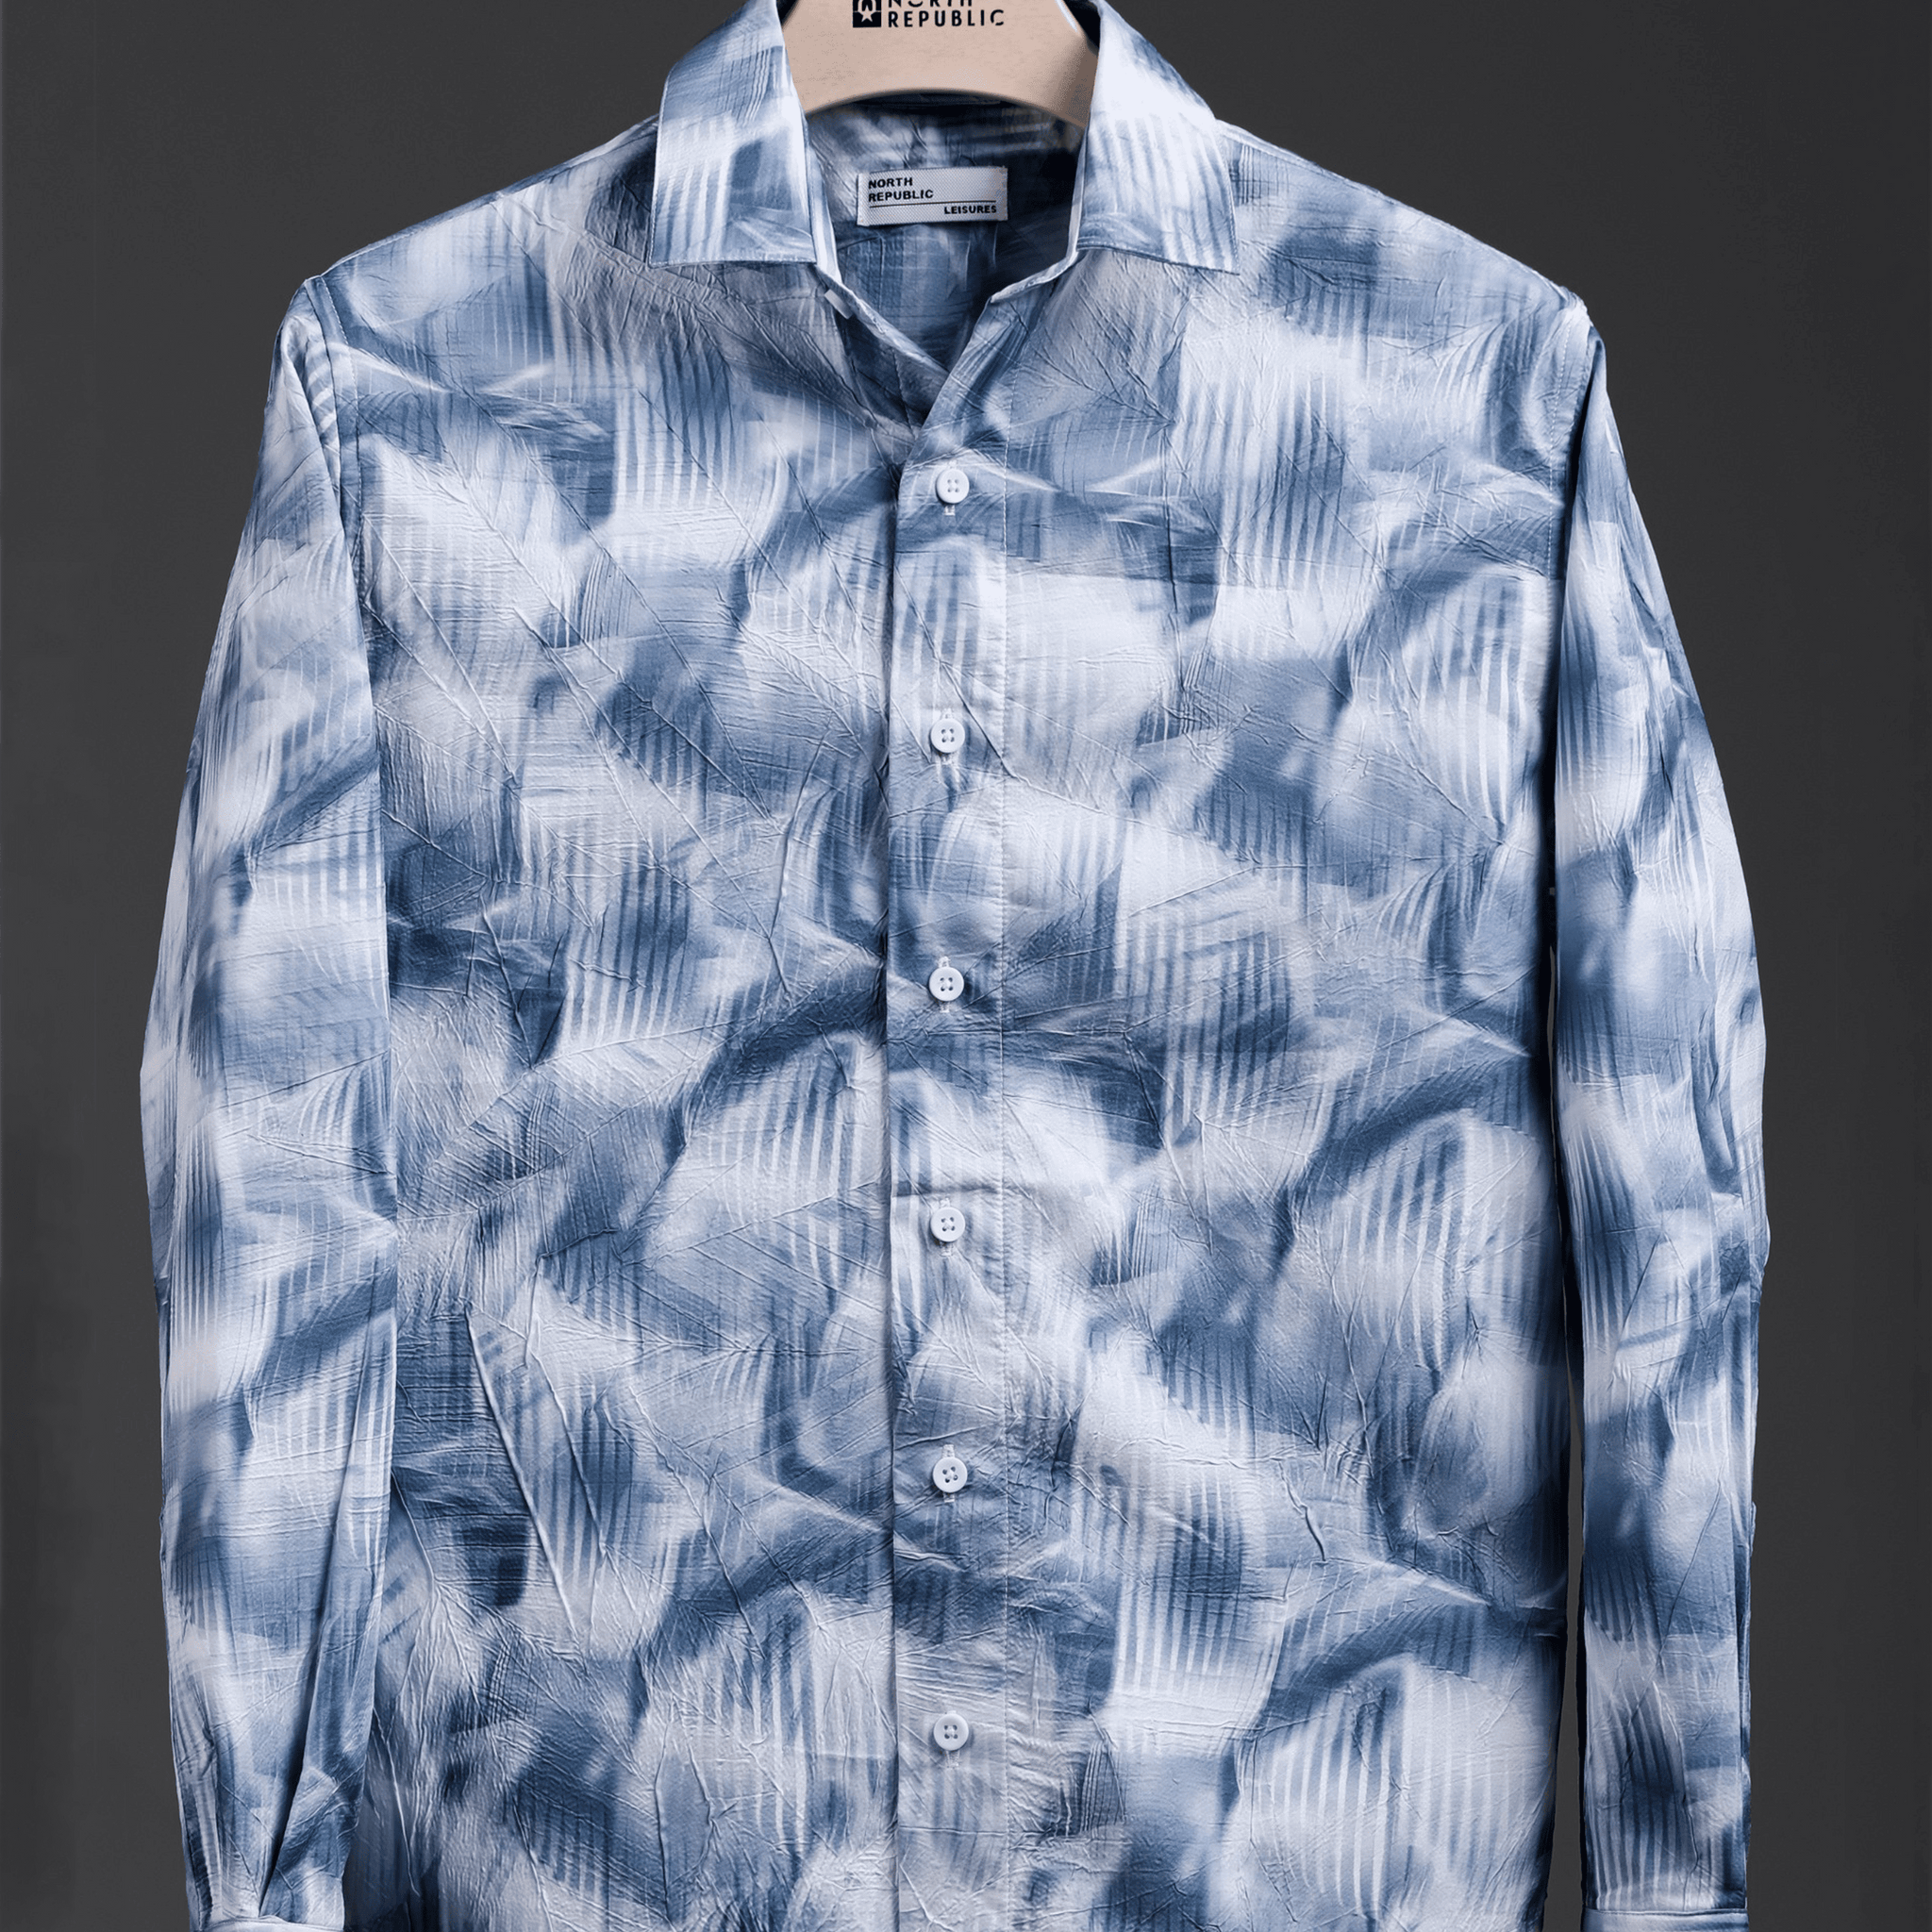 Soft Finish Leaf Pattern Foiling printed Shirt | Ash White